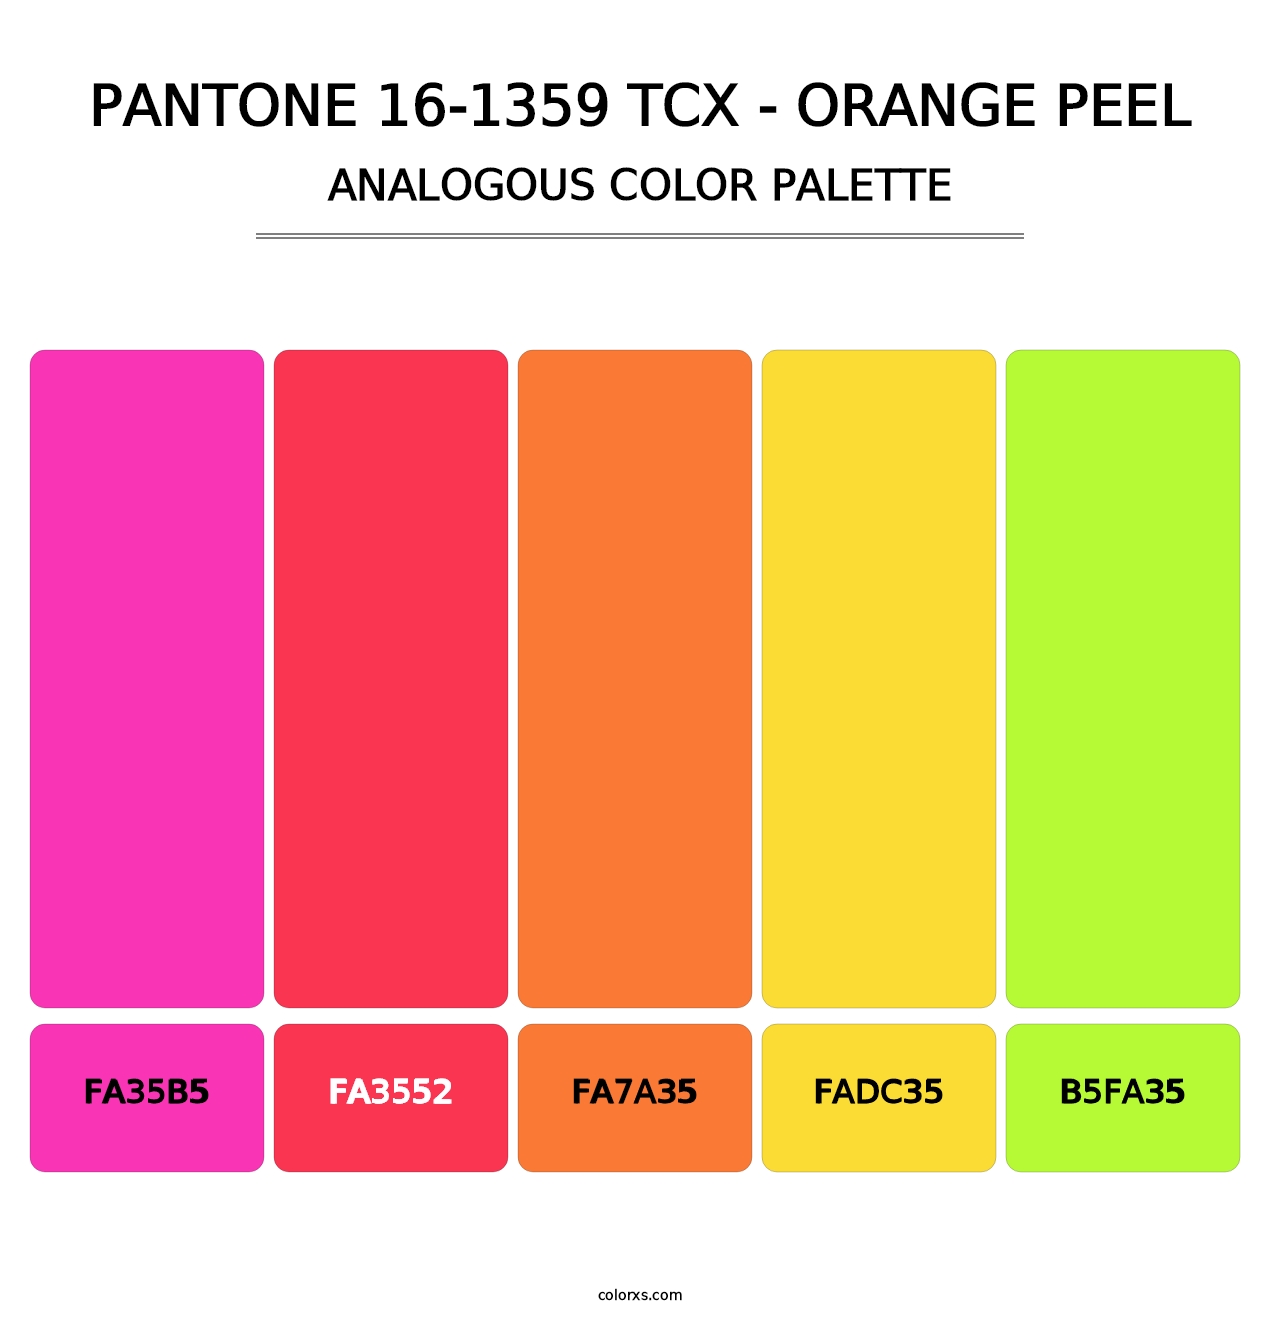 PANTONE 16-1359 TCX - Orange Peel - Analogous Color Palette